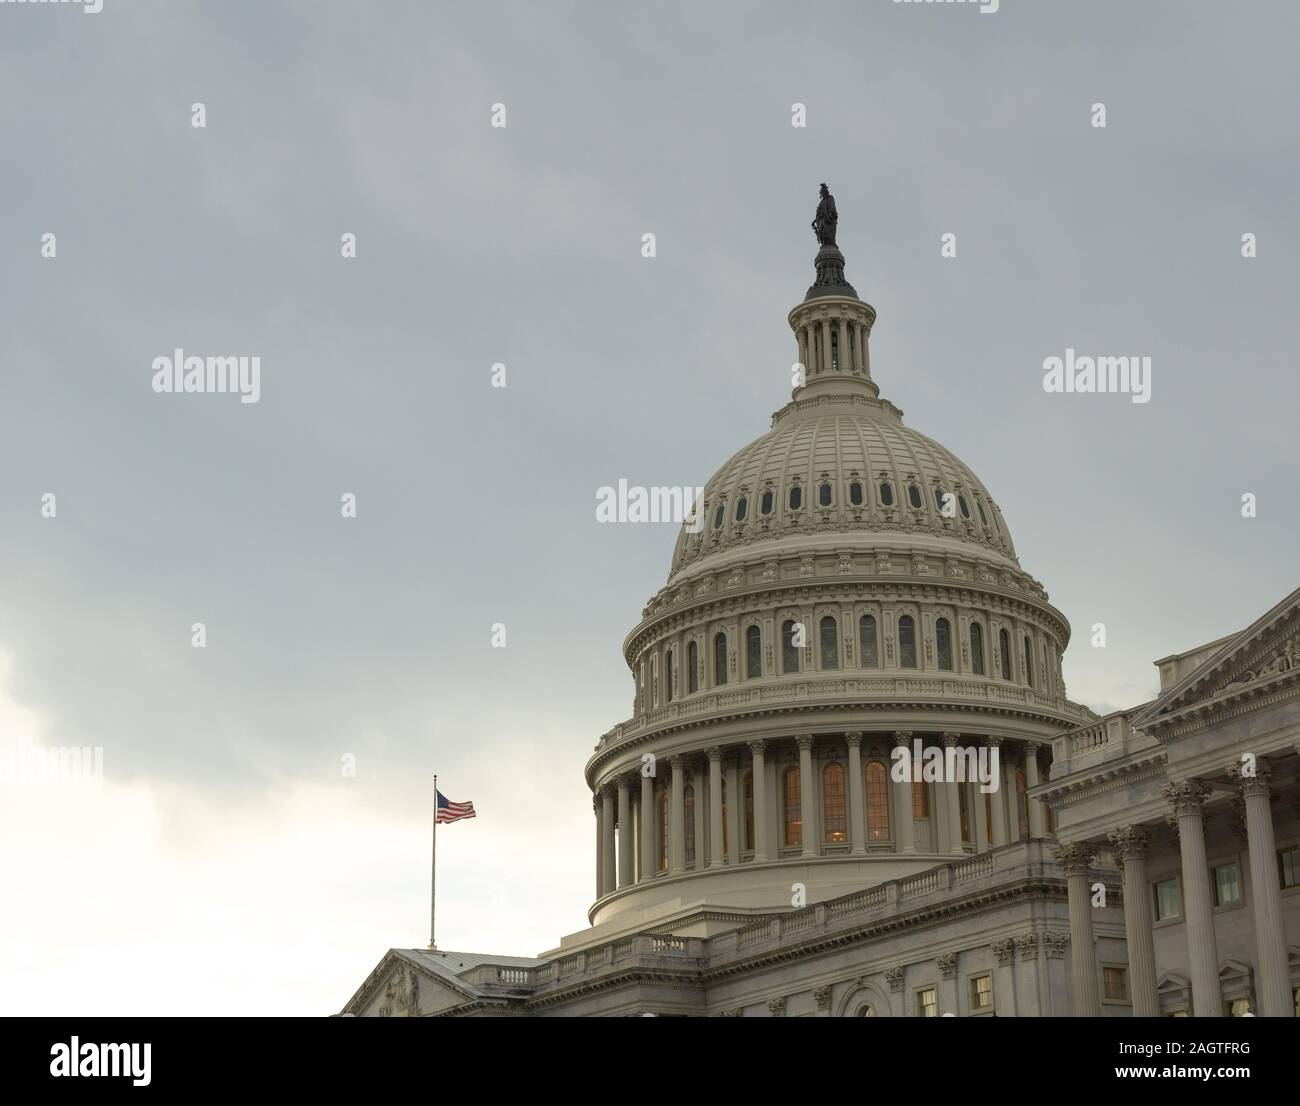 May 25, 2019, Washington D.C. Storm clouds gather over the U.S. Capitol building, Washington D.C. Stock Photo